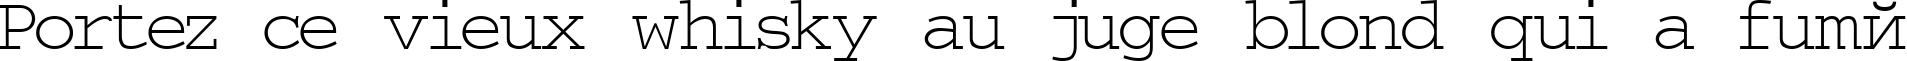 Пример написания шрифтом TypeWriter Normal текста на французском